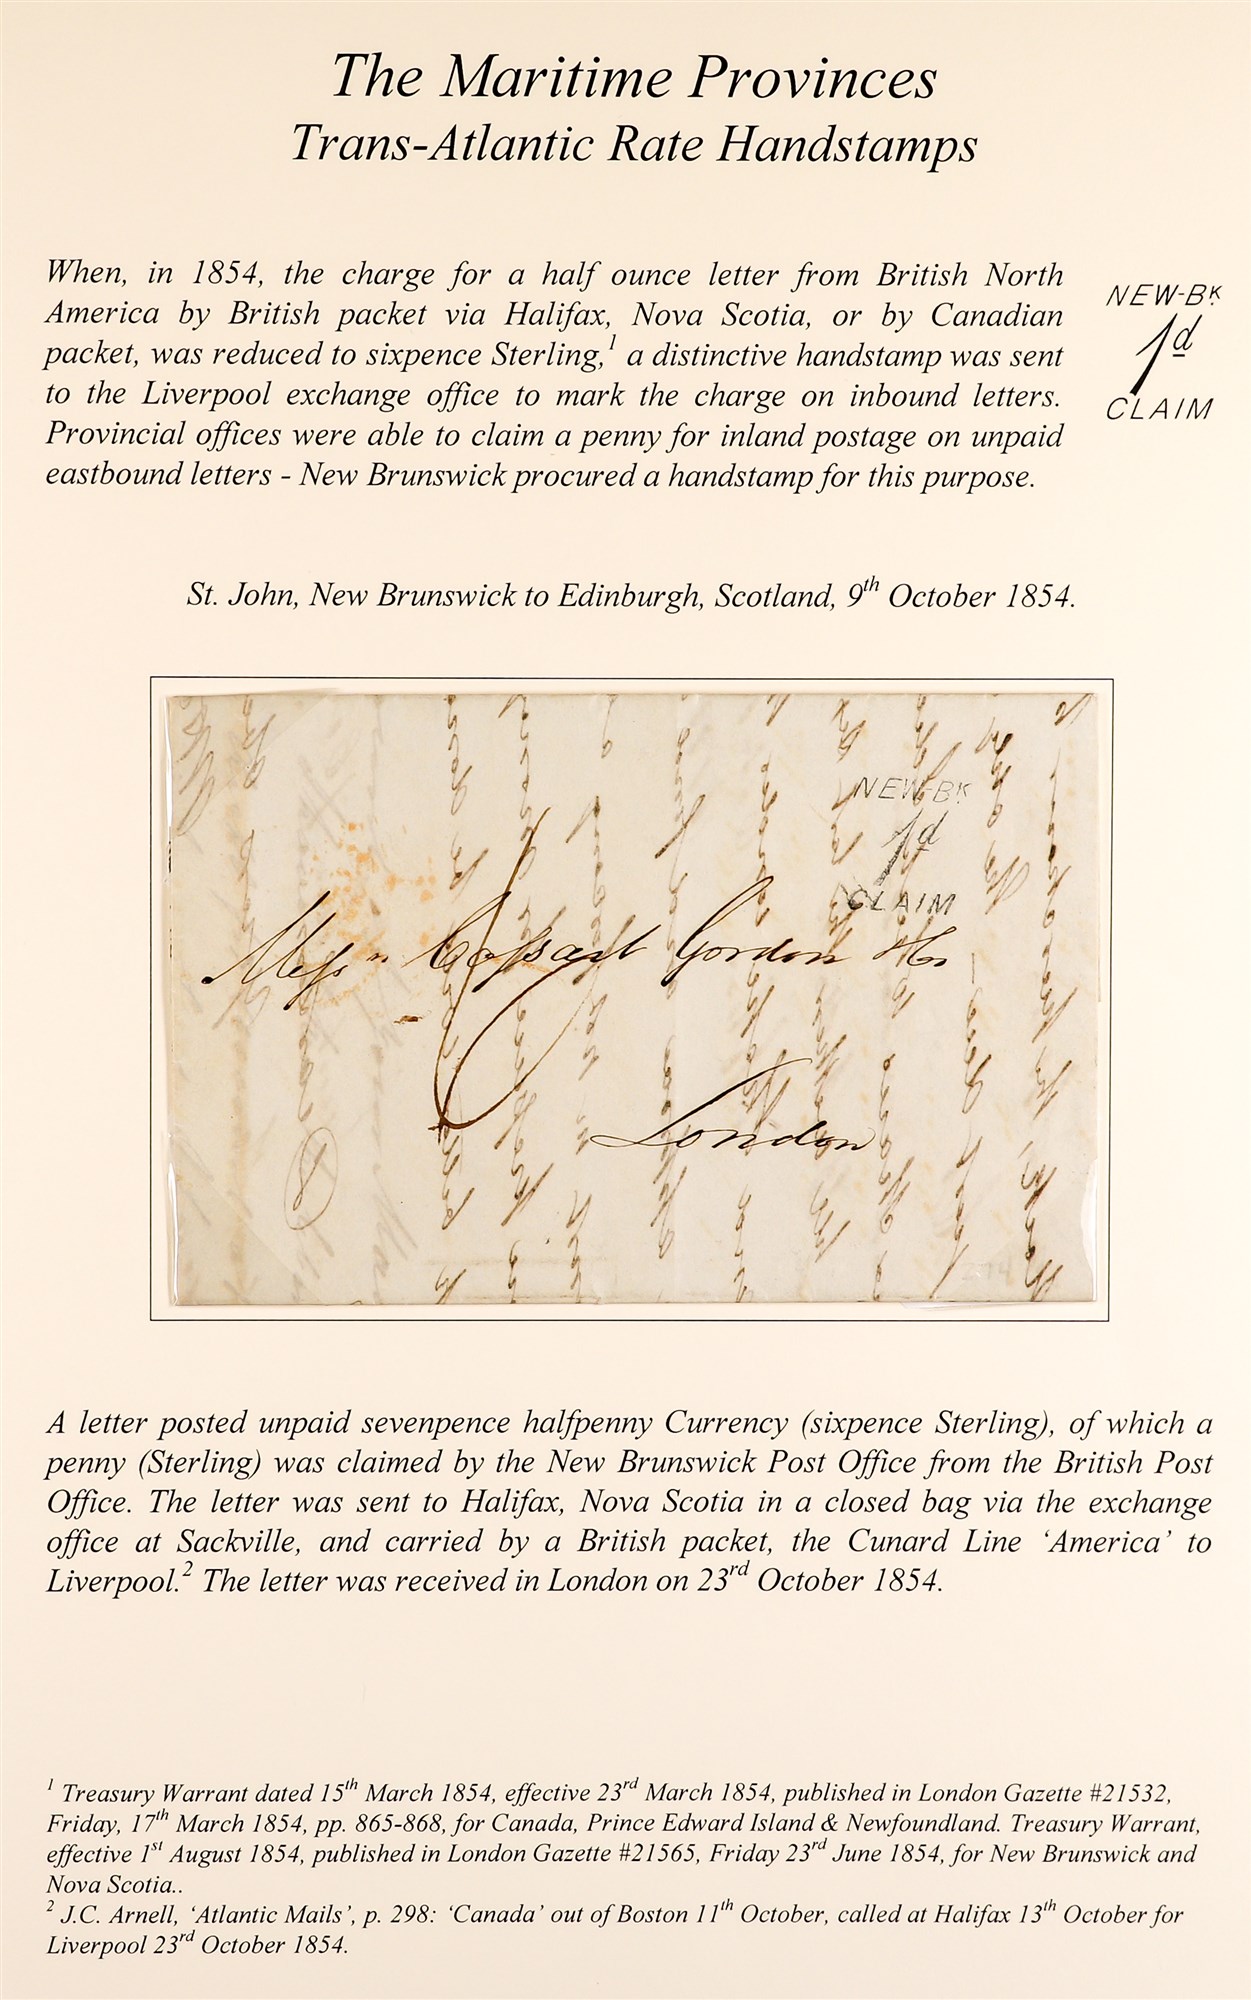 CANADA 029 TRANS-ATLANTIC MAIL 1854 ST. JOHN NEW BRUNSWICK TO EDINBURGH, SCOTLAND (9th October)